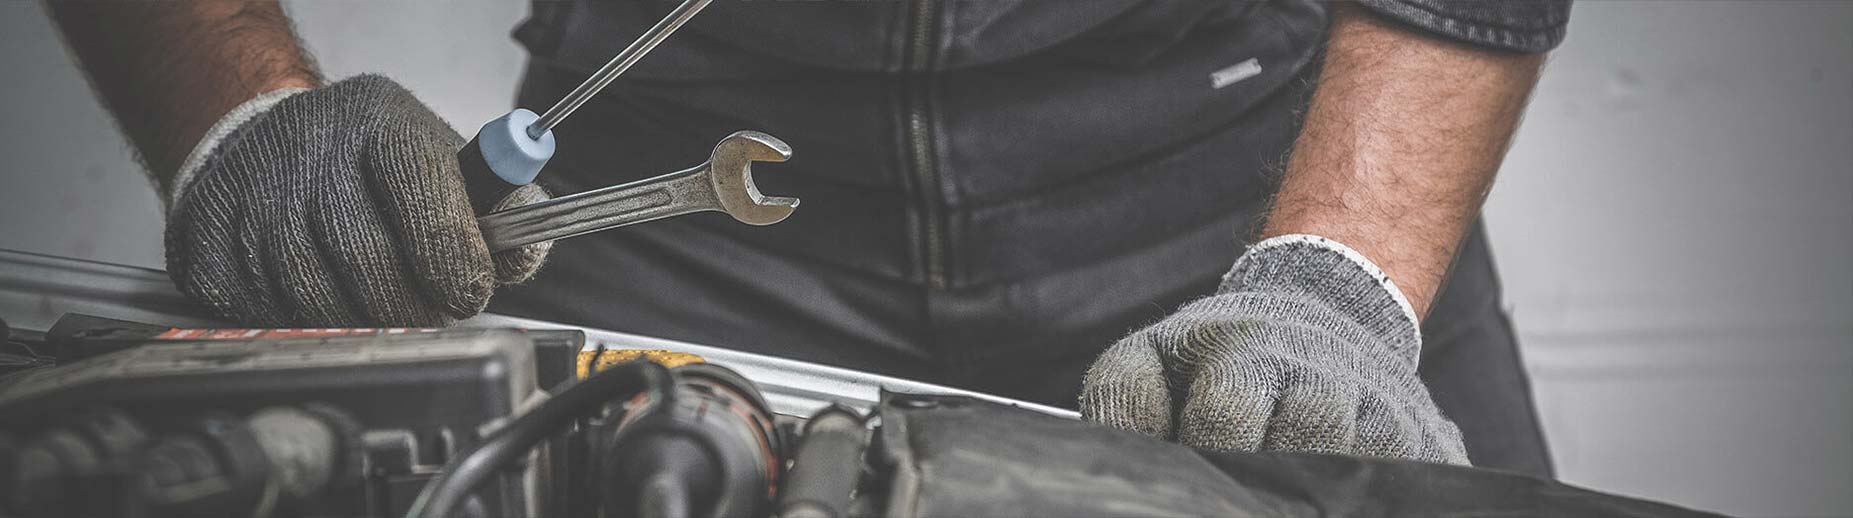 Shrewsbury Auto Repair, Auto Mechanic and Transmission Repair